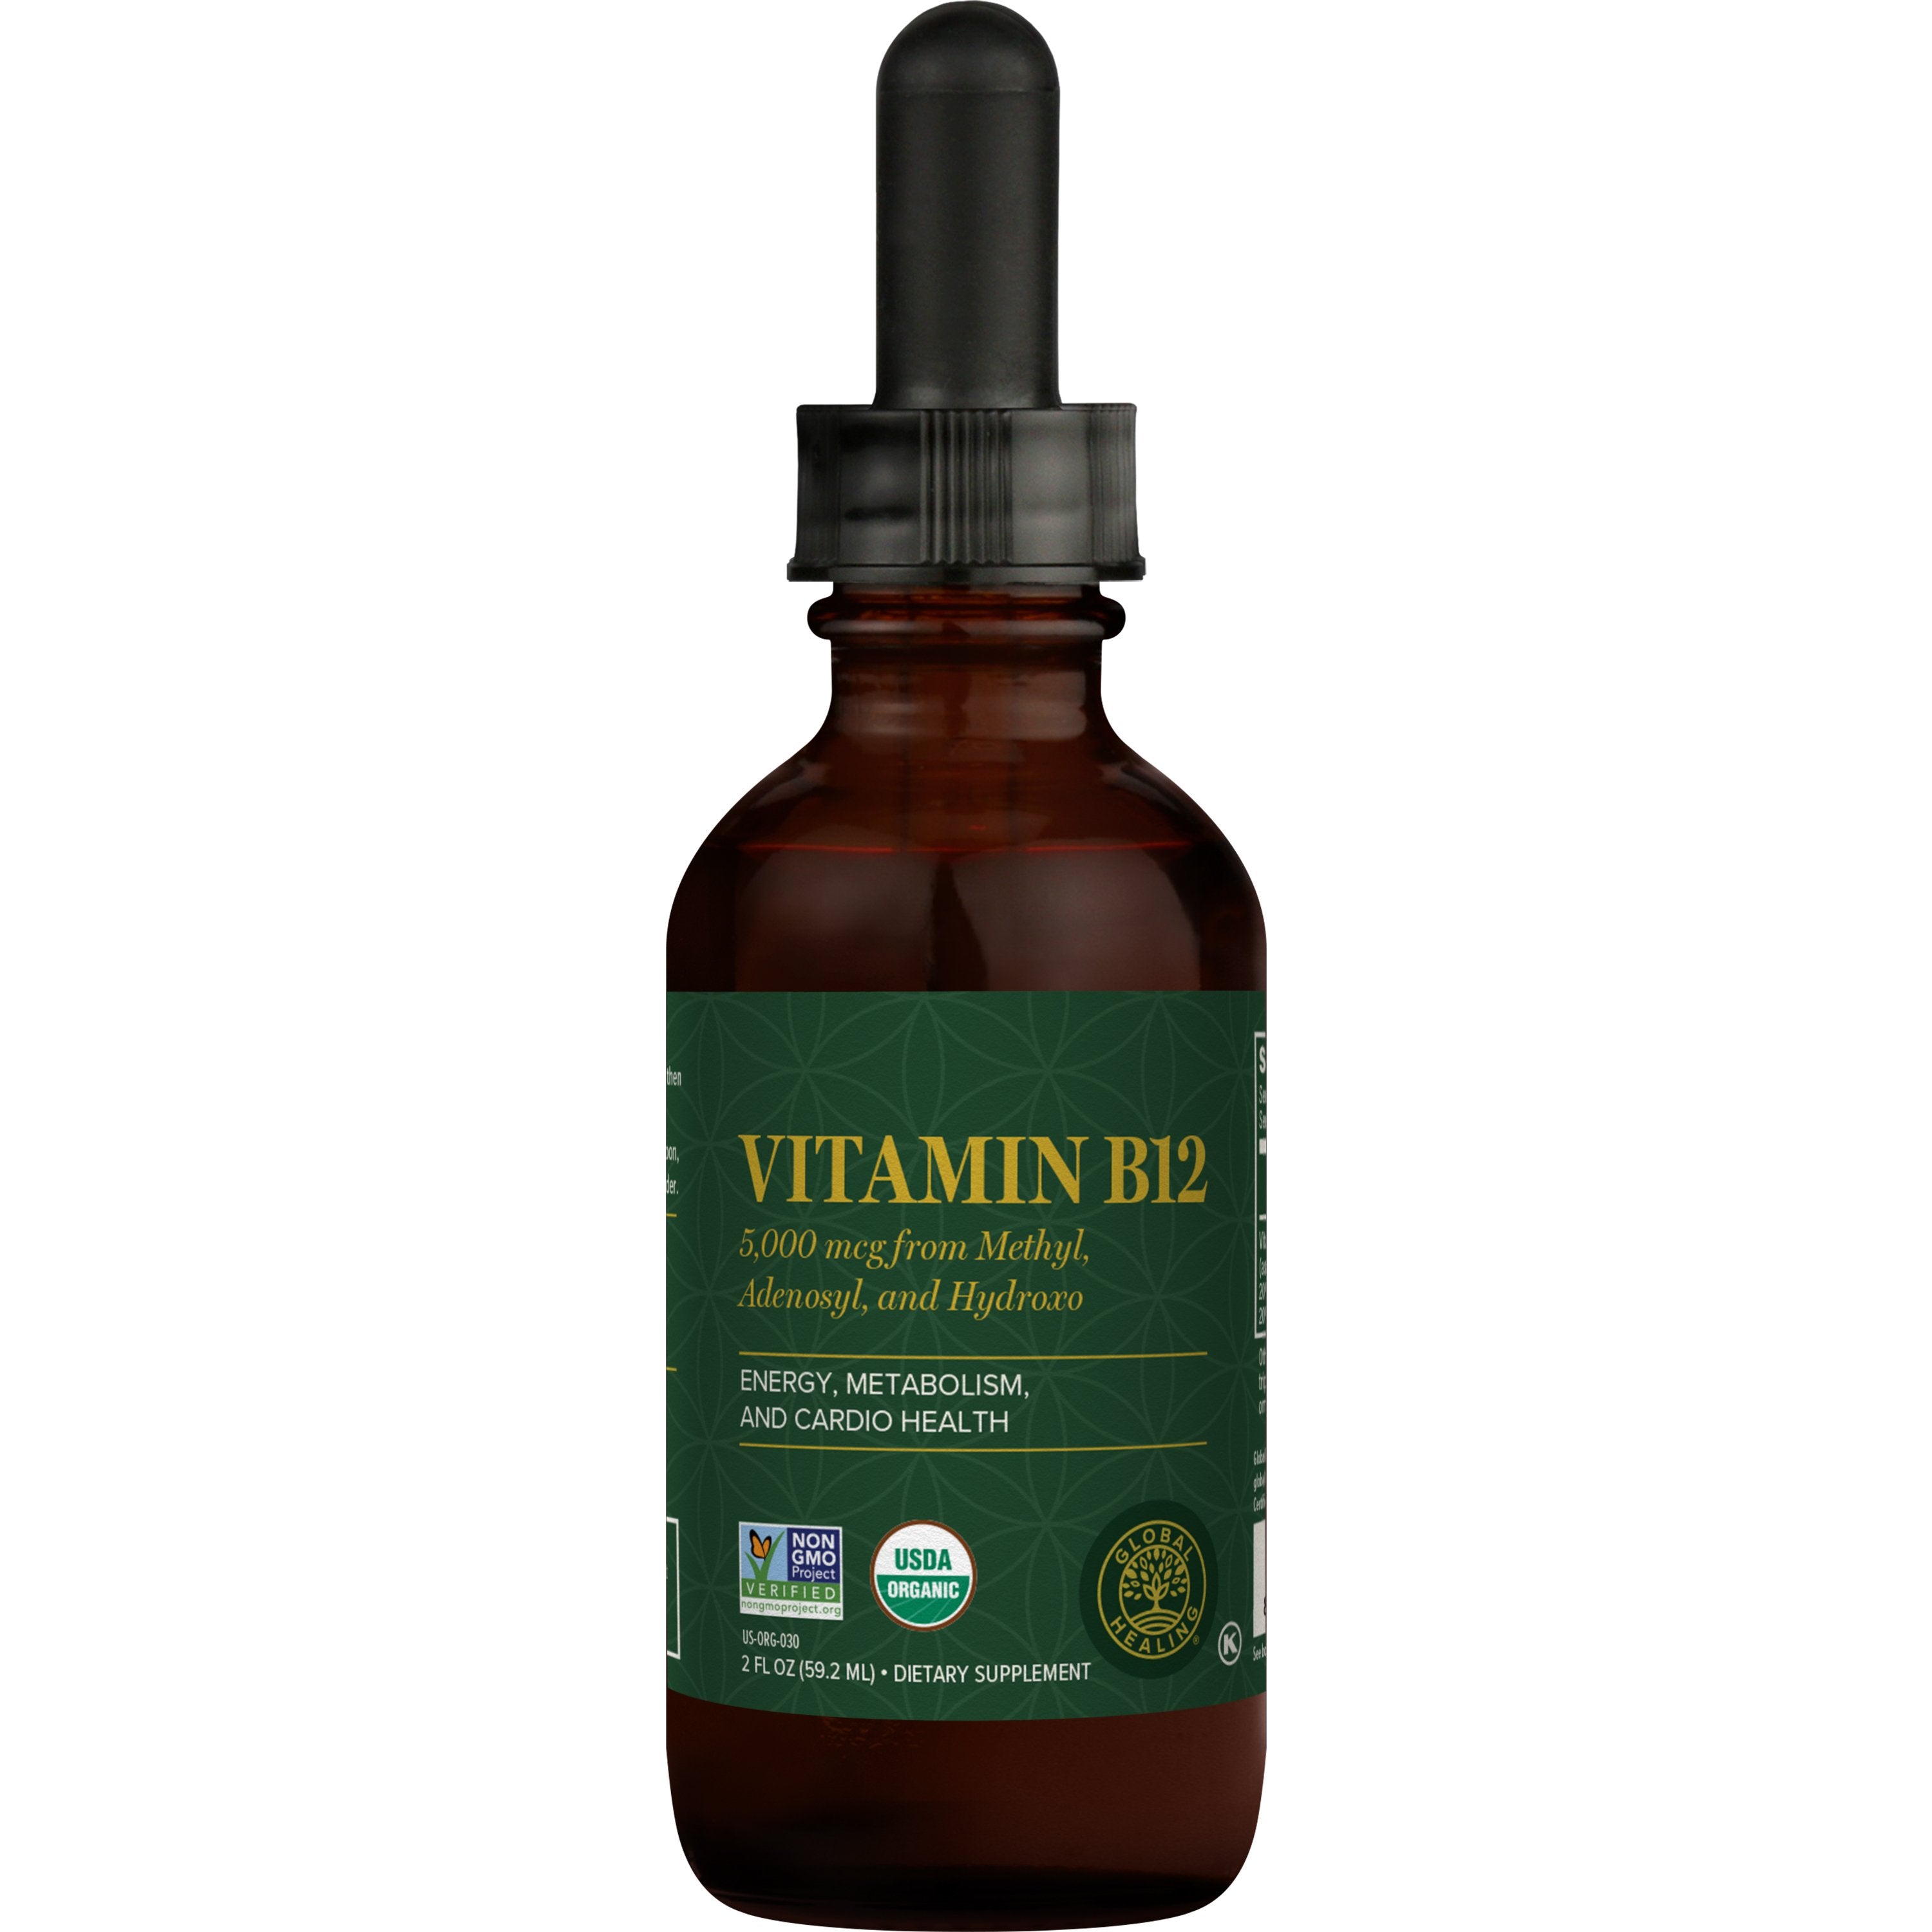 Global Healing Organic Vitamin B12 2fl Oz 59.2ml Bottle